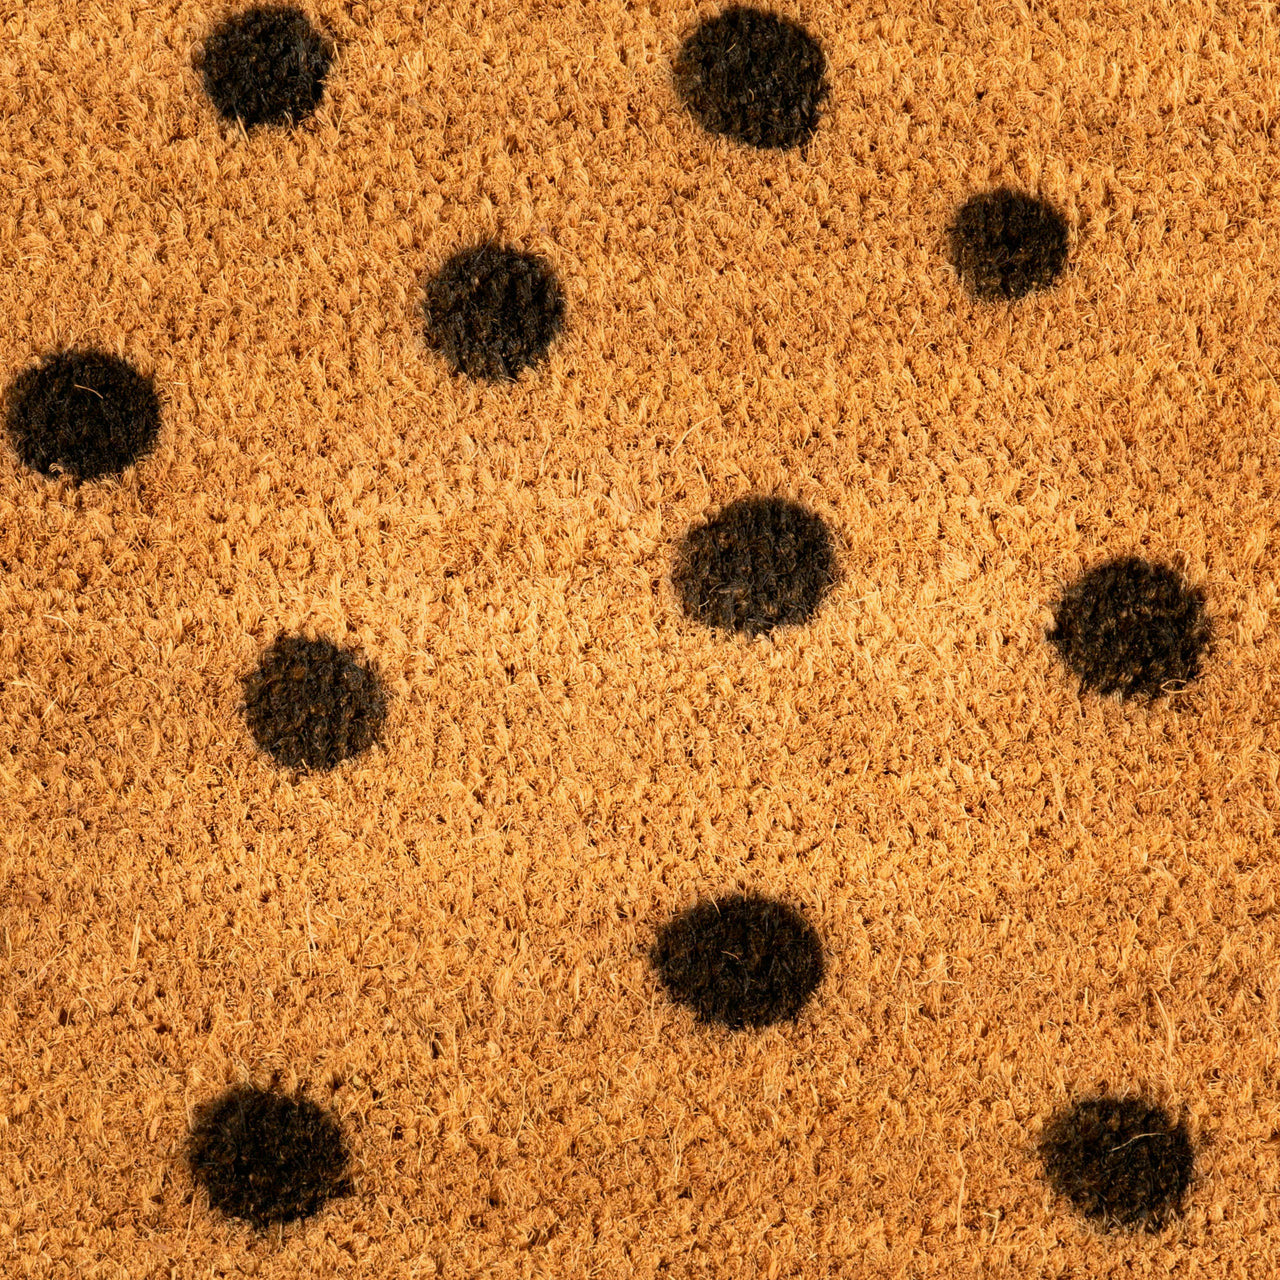 Artsy Doormats Country Home Dots Doormat